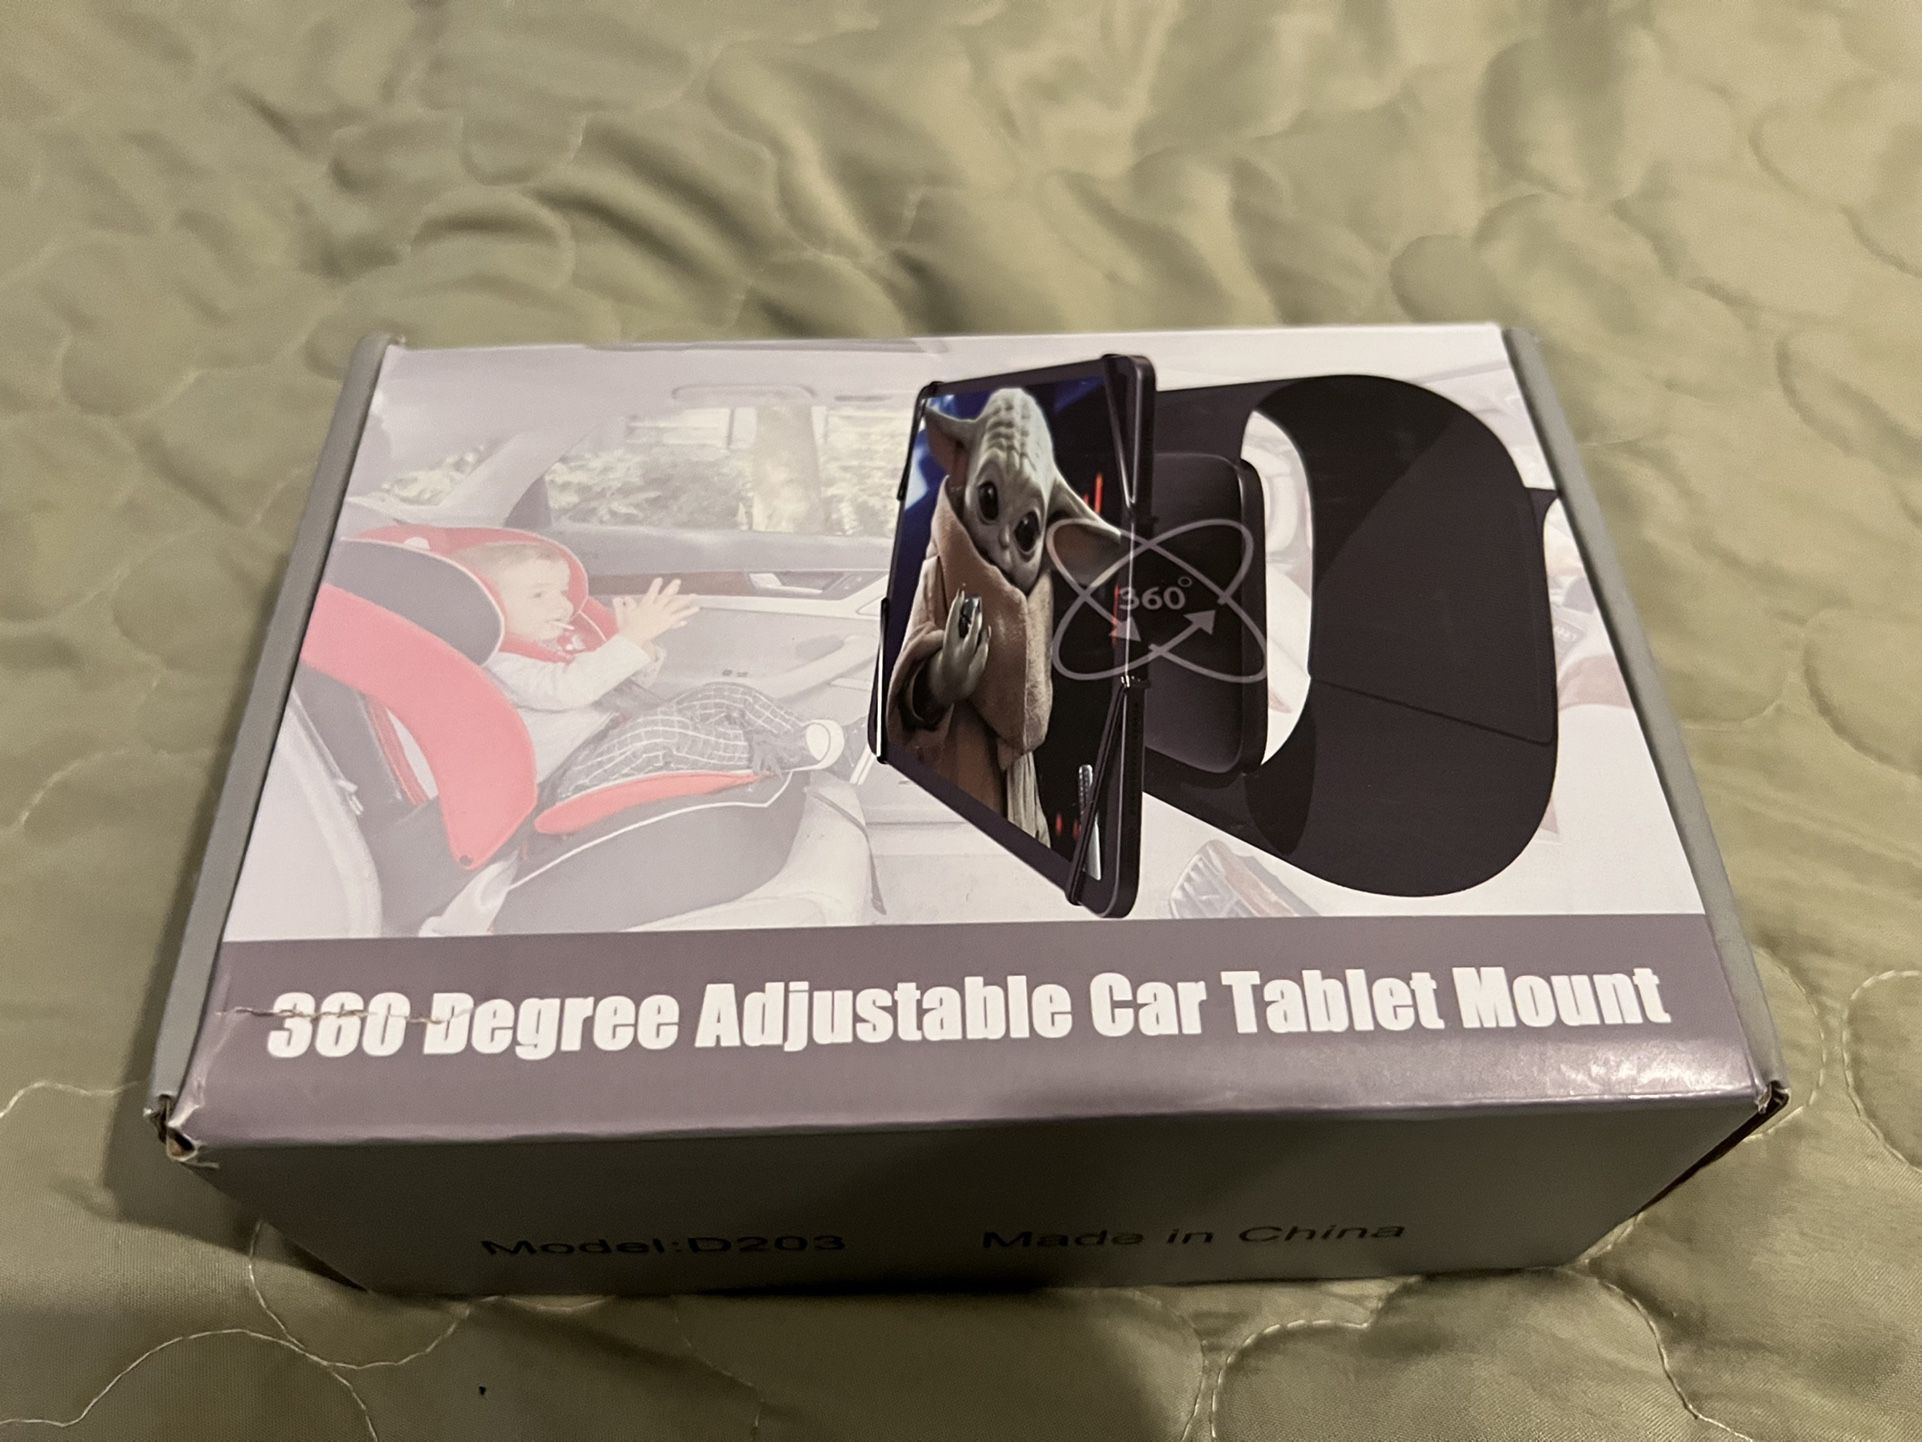 Eats a 360 Degree Adjustable Car Tablet Mount